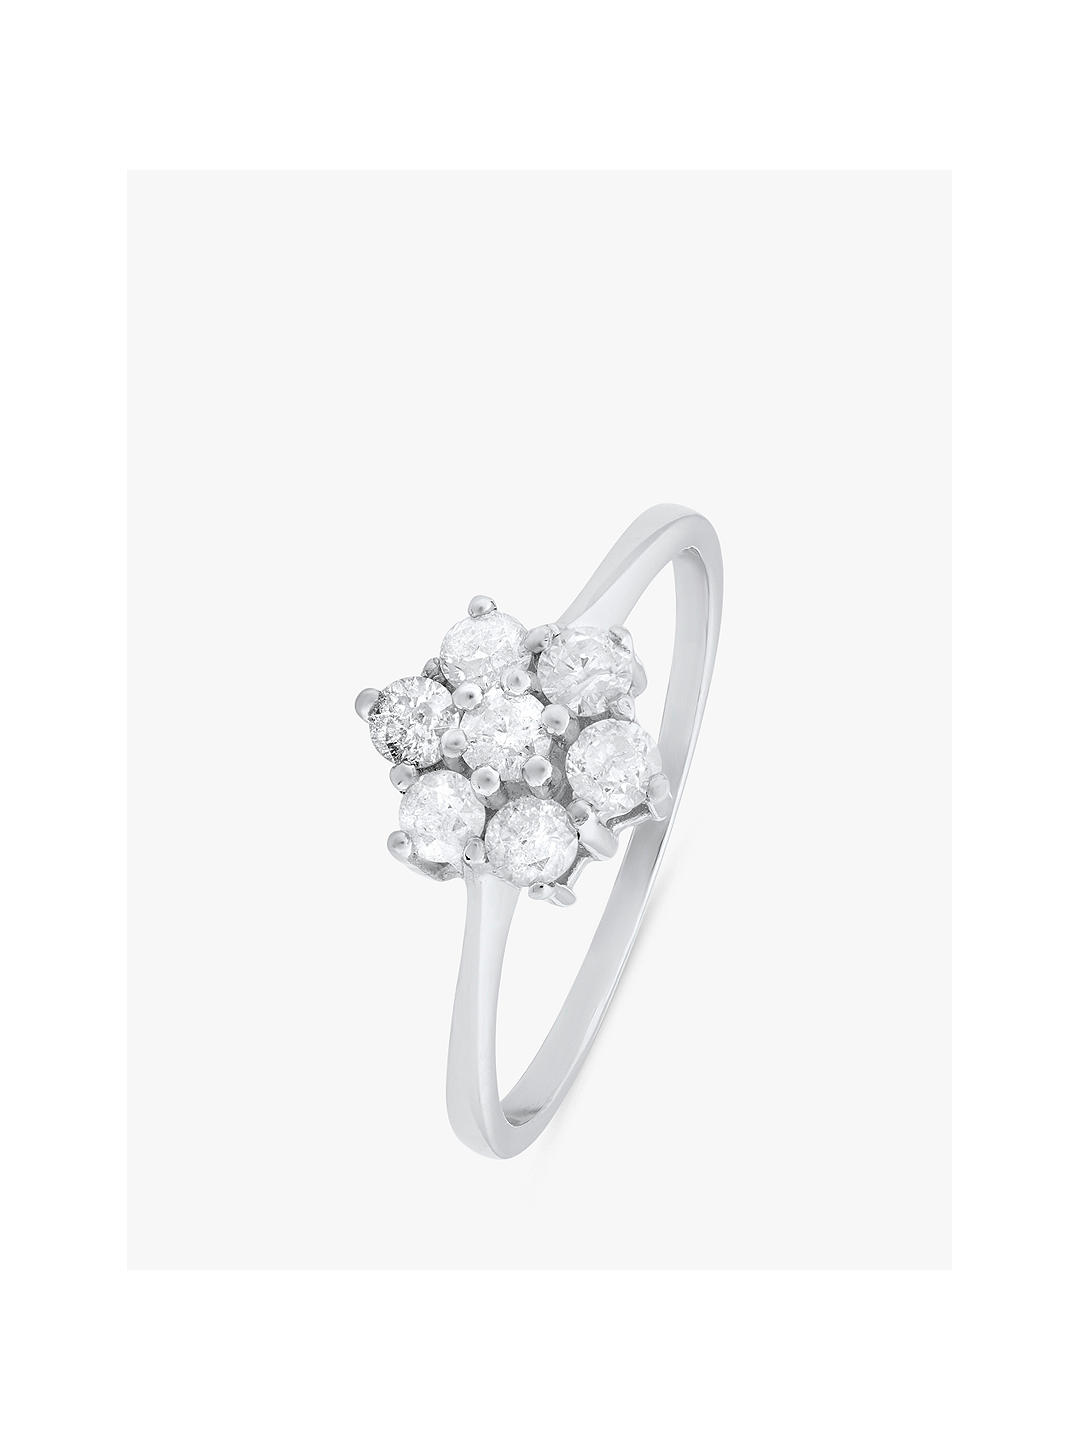 L & T Heirlooms Second Hand Platinum Diamond Cluster Ring